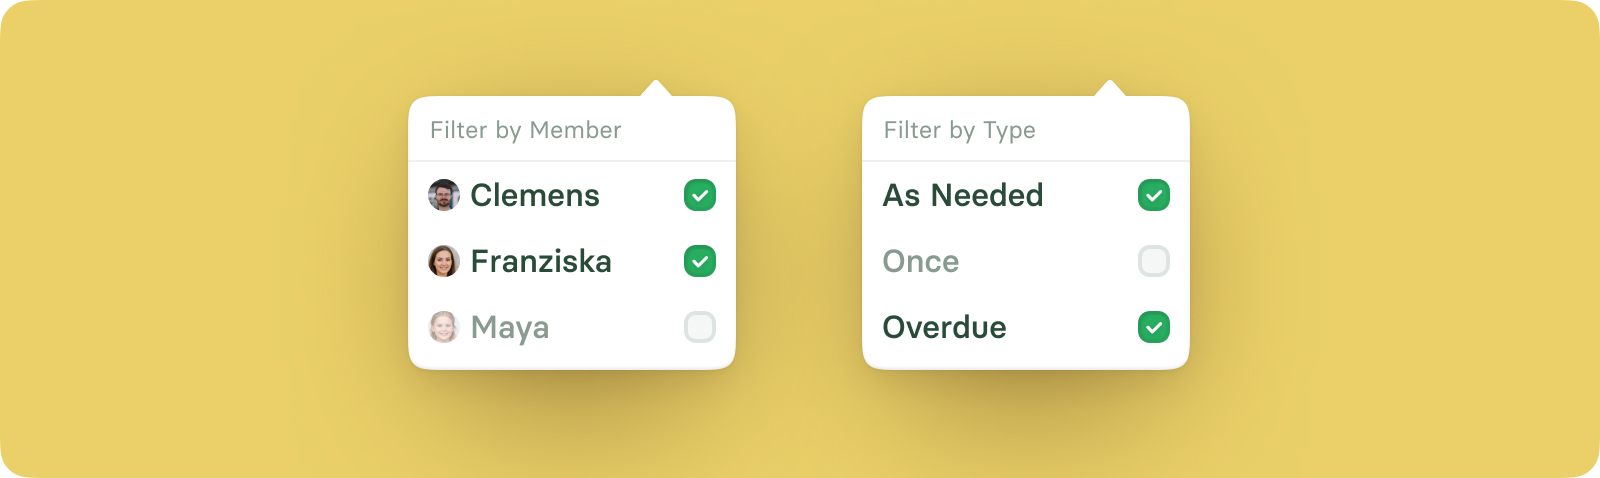 filter types